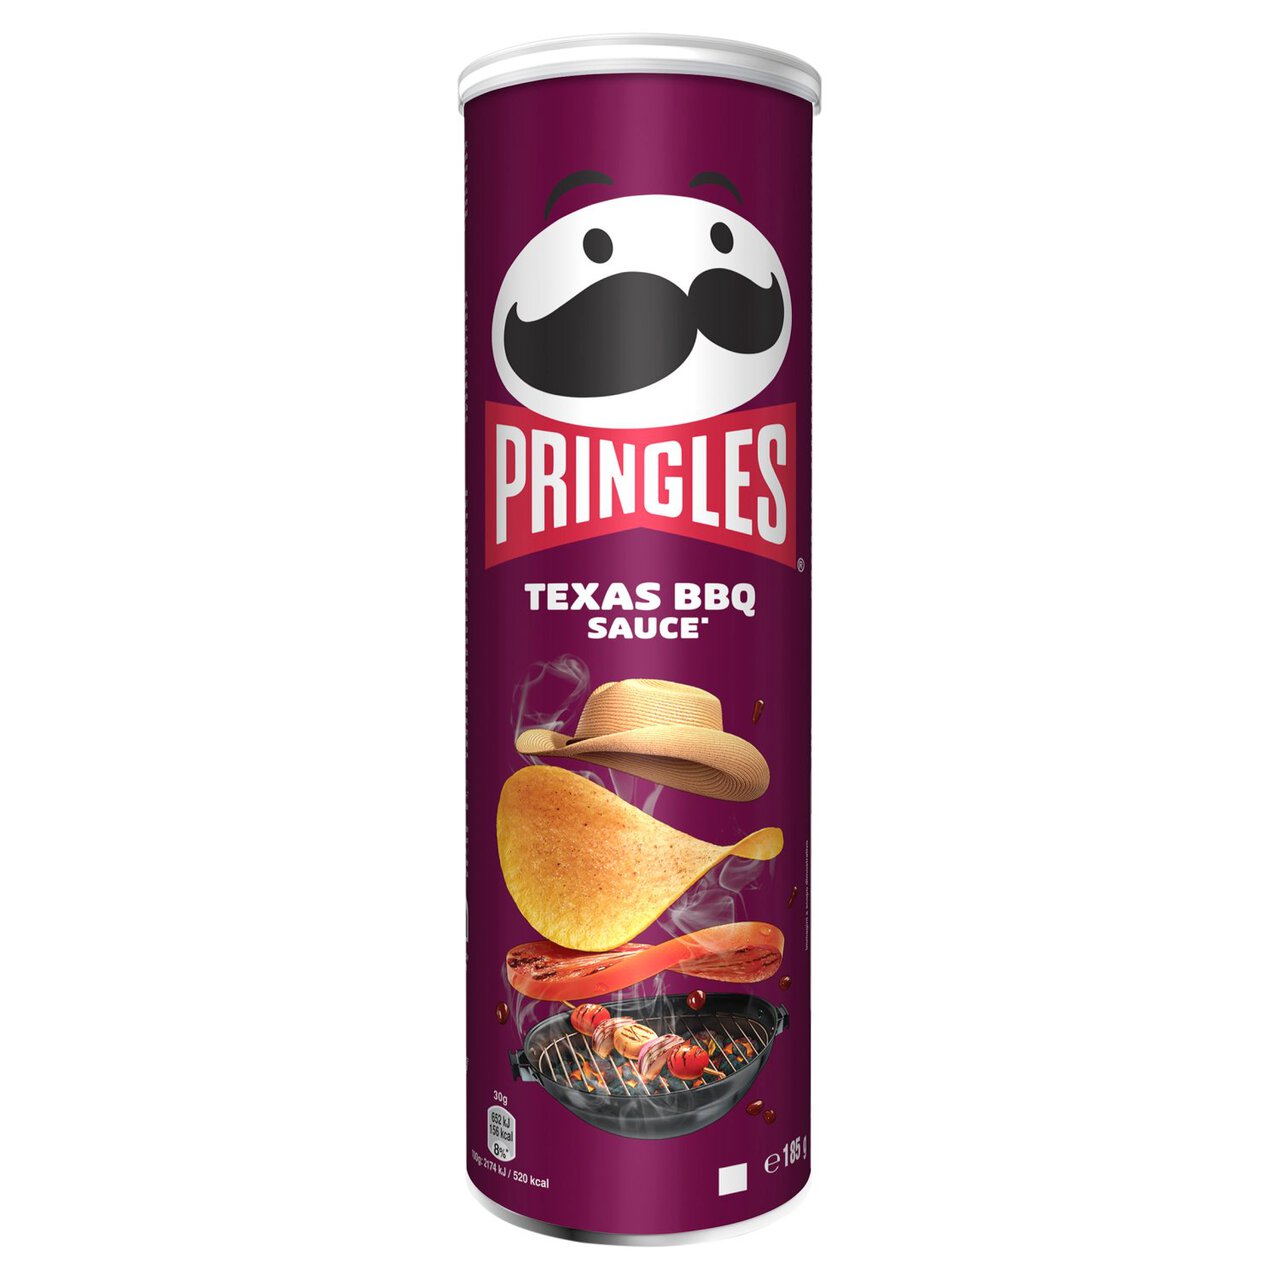 Pringles Texas BBQ Sauce Flavour Sharing Crisps 185g